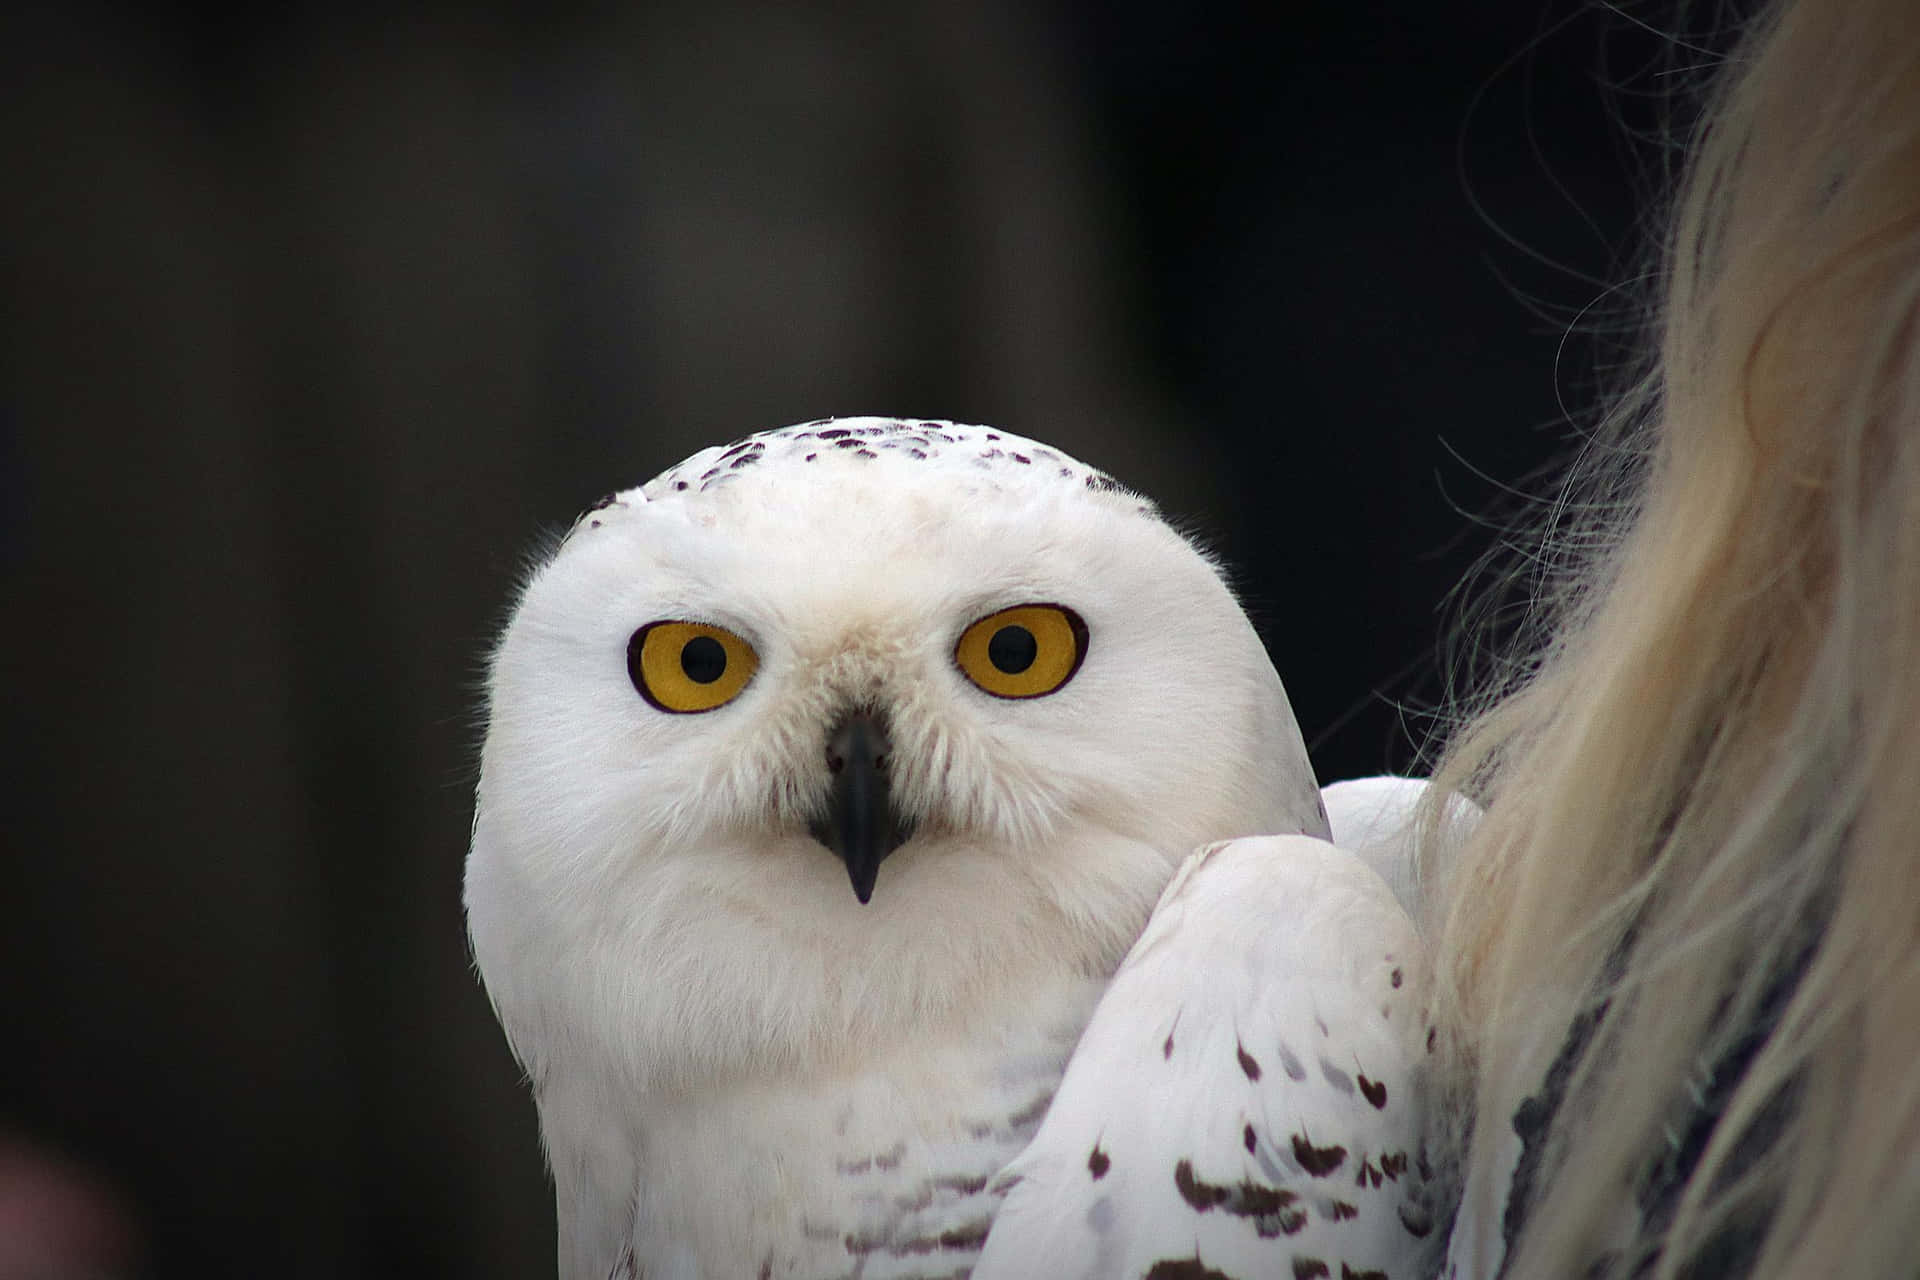 "Encounter with a majestic Snowy Owl"